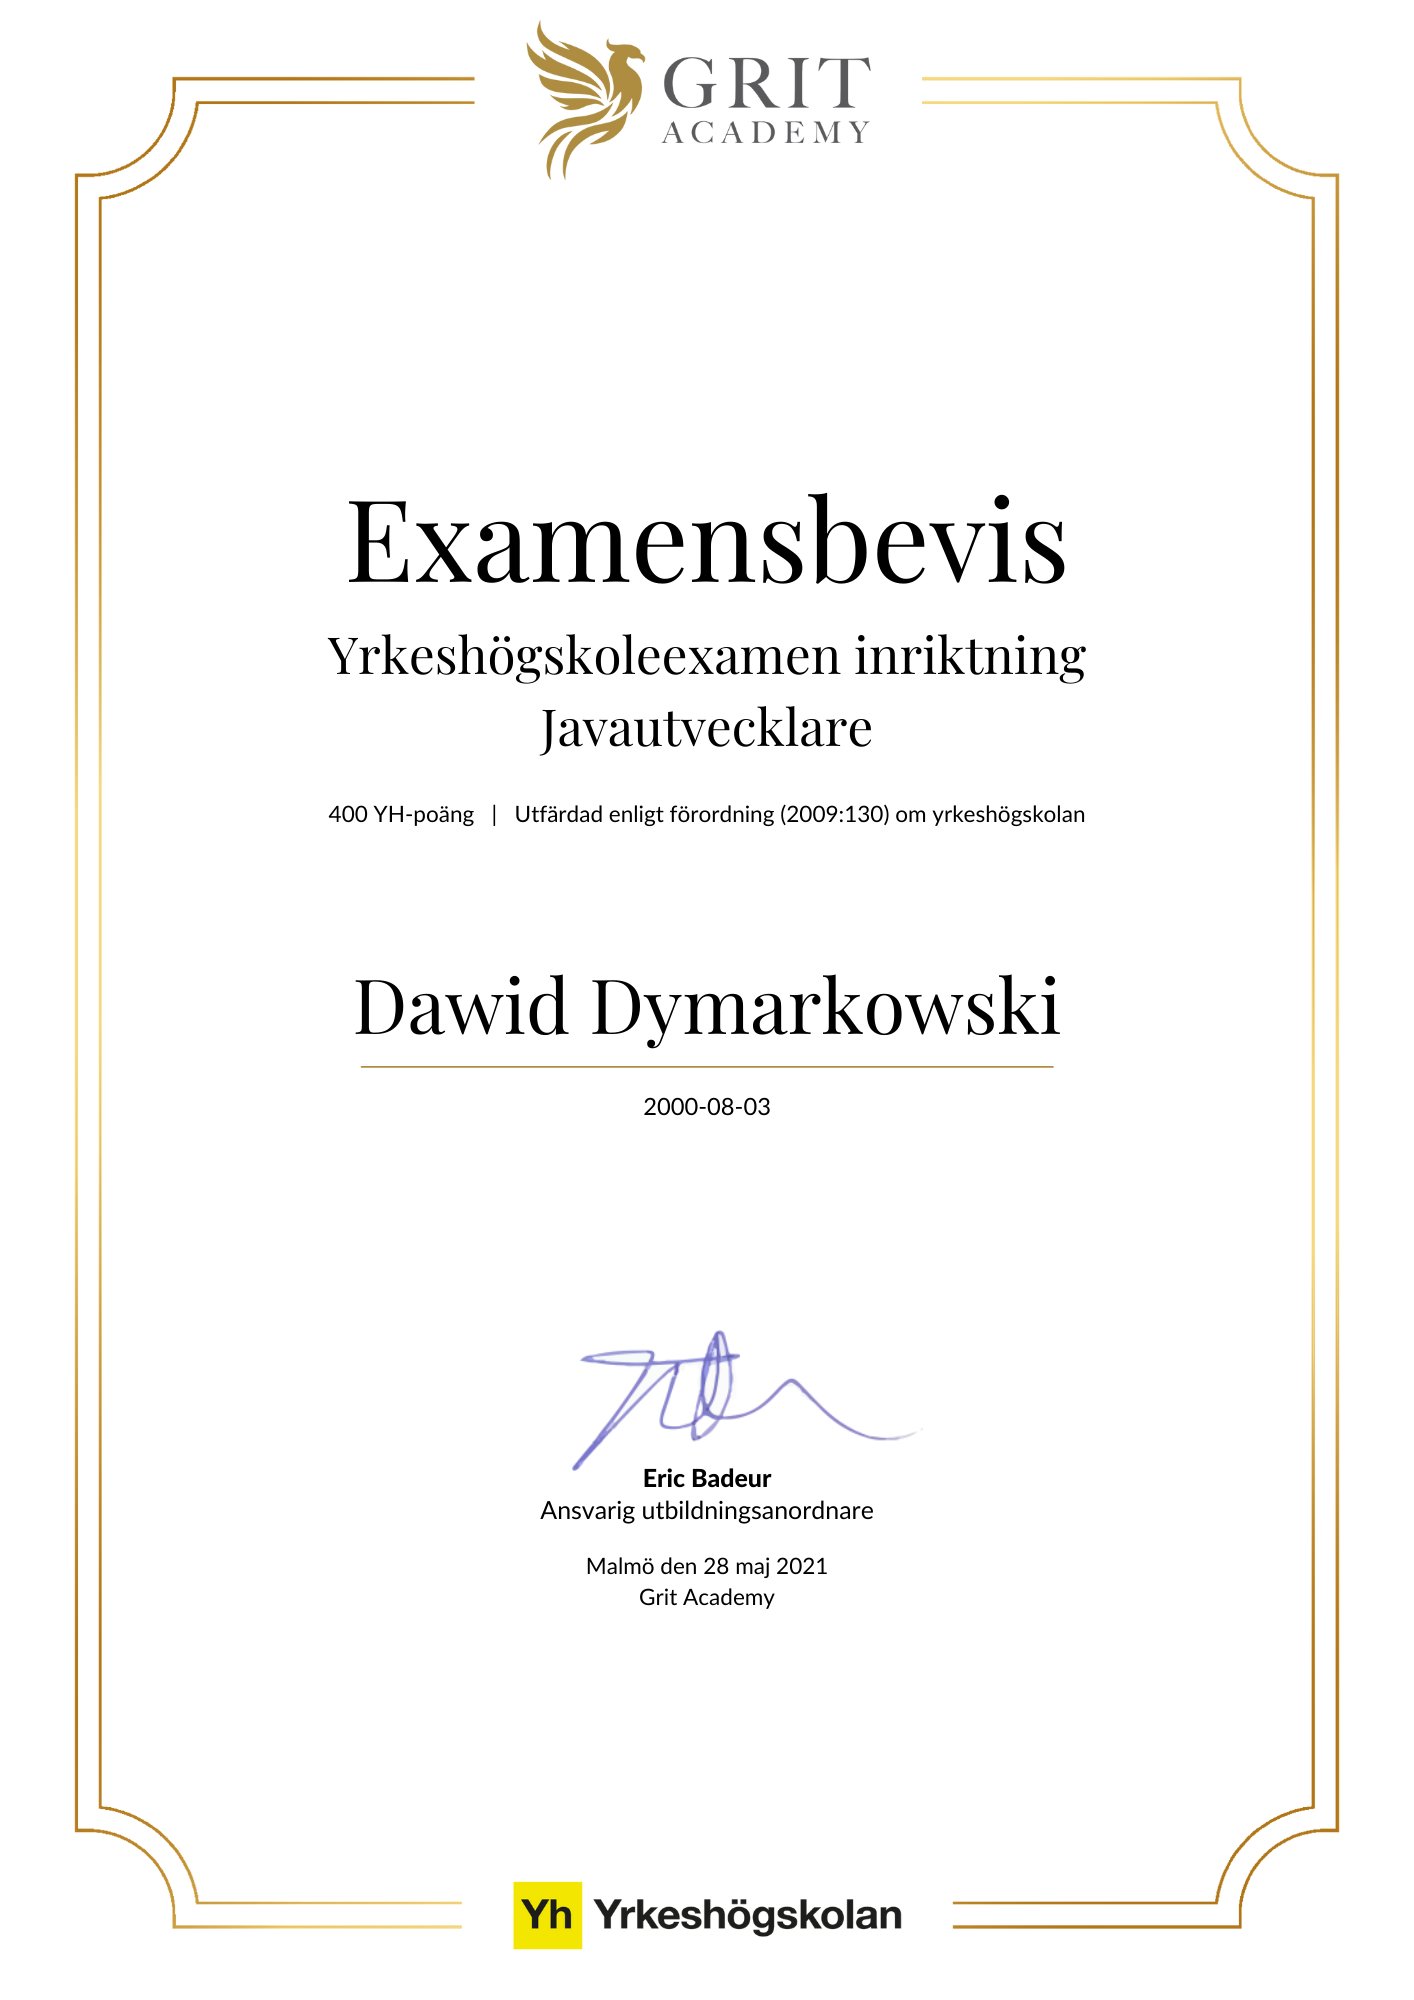 Examensbevis Dawid Dymarkowski - 1